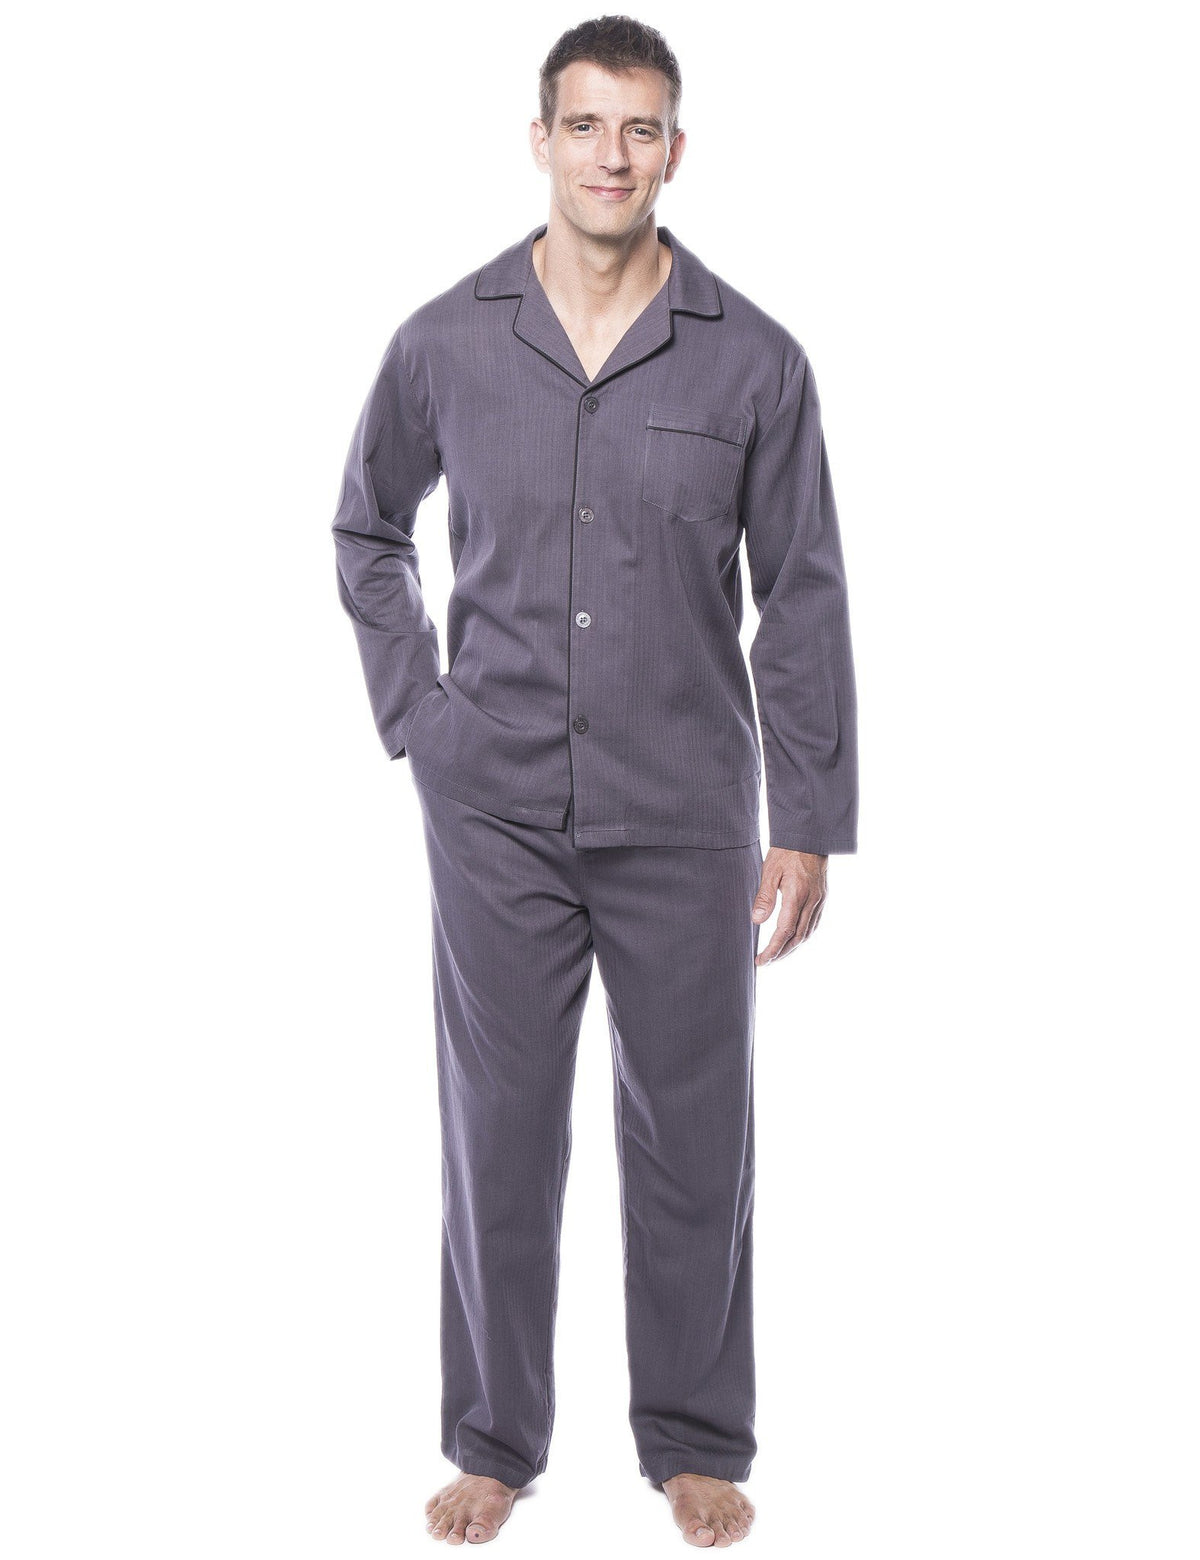 Men's 100% Woven Cotton Pajama Sleepwear Set - Herringbone Dark Grey